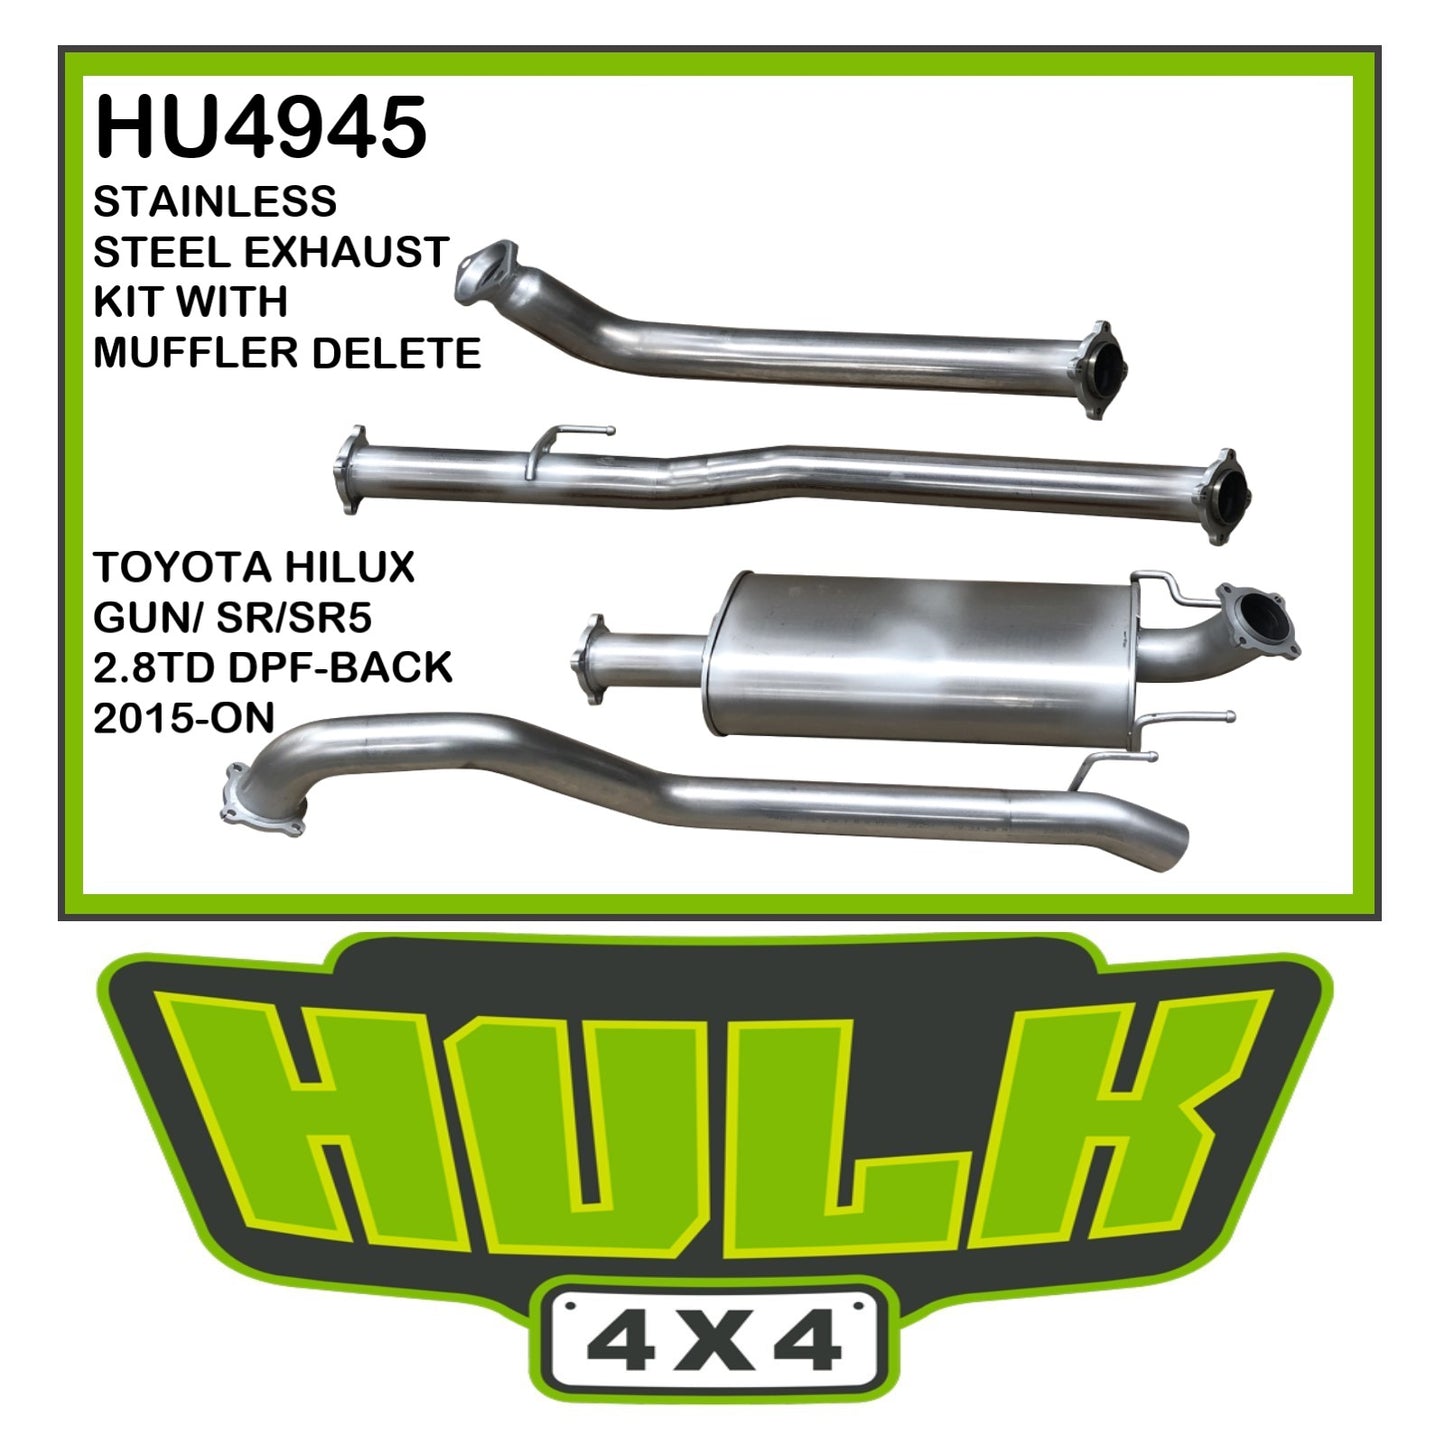 Hulk 4x4 Stainless steel exhaust kit w/muffler delete- Toyota Hilux GUN/ SR/SR5 2.8TD DPF-BACK 2015-ON HU4945